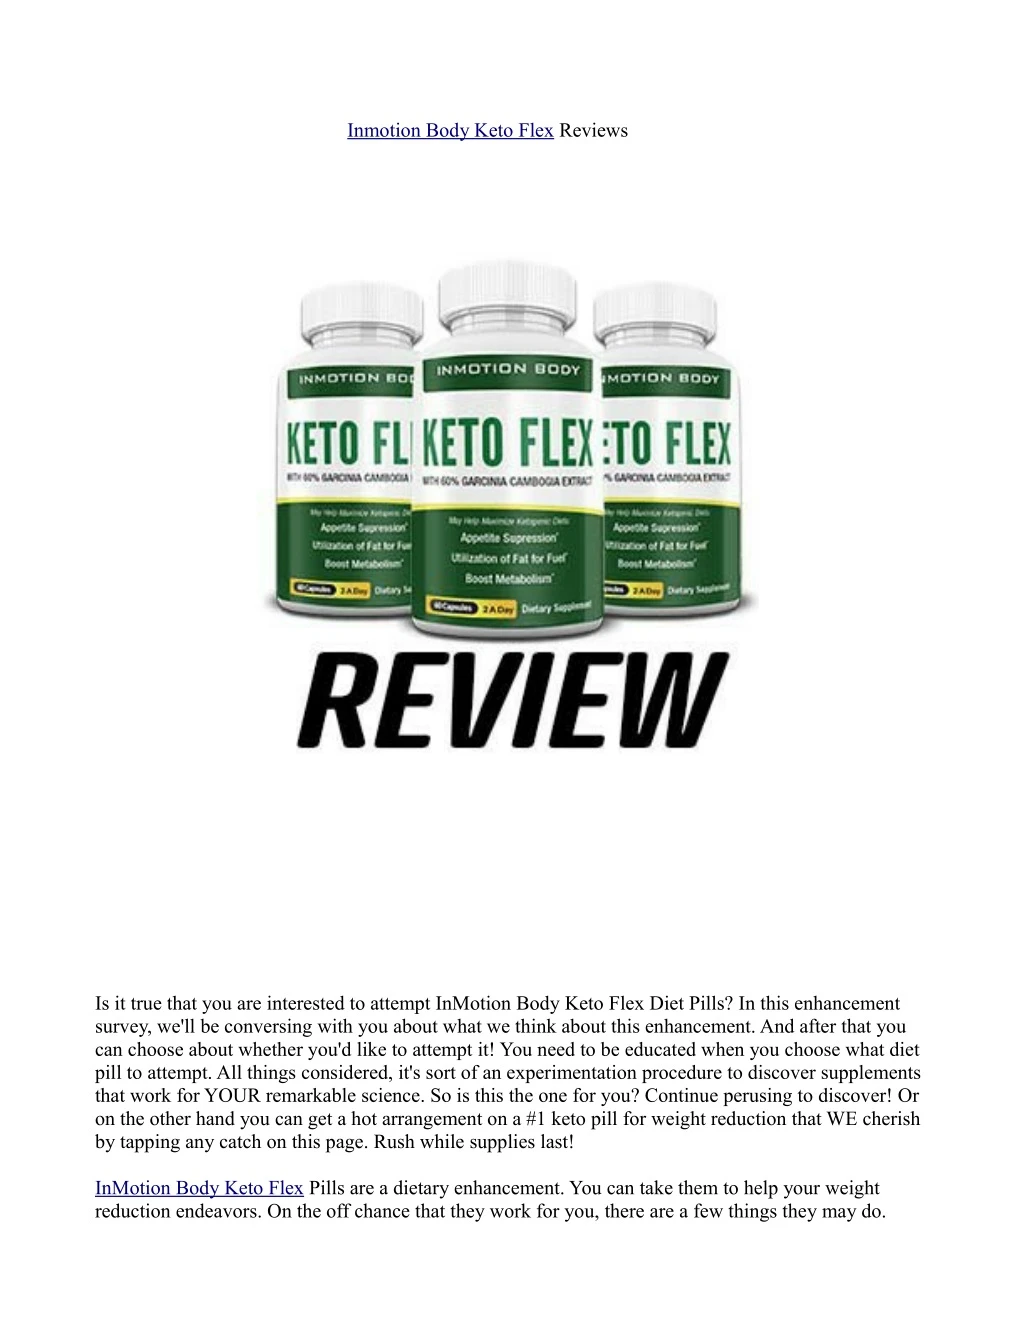 inmotion body keto flex reviews